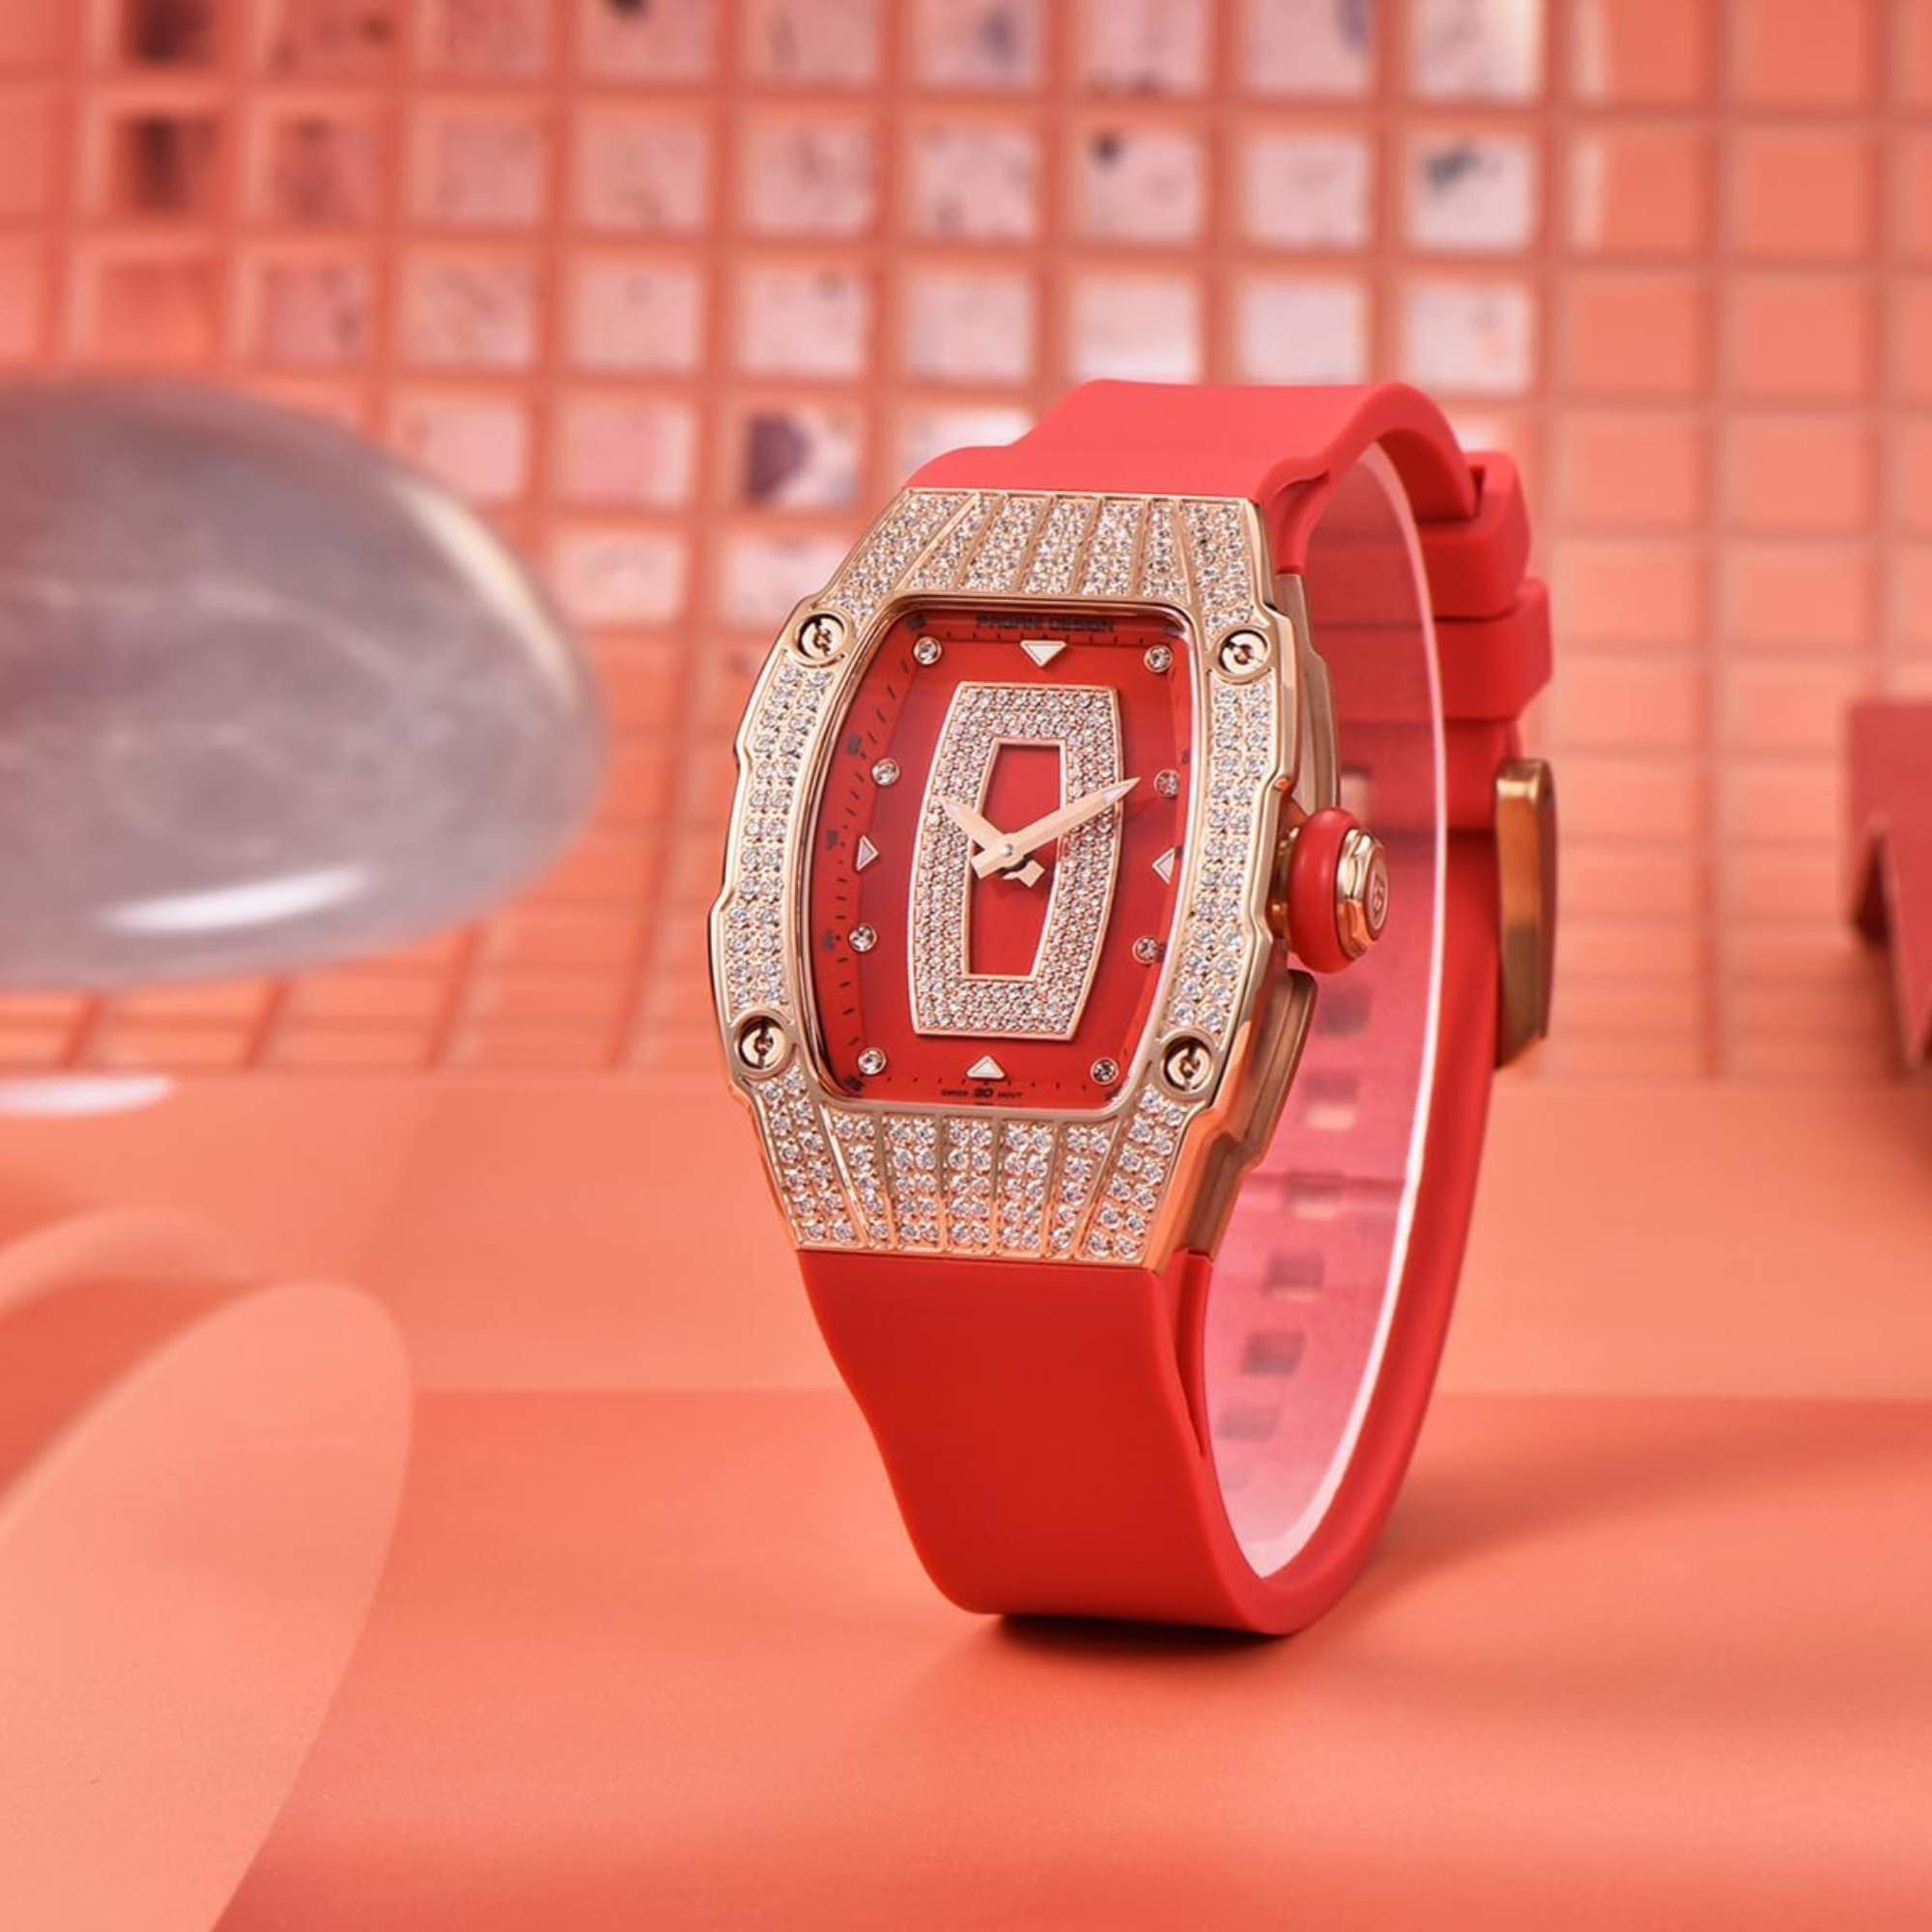 Pagani Design PD-YS013 Bergani Fashion Women's Diamond Inlaid Watch Waterproof Sports Waterproof Night Glow Trend Silicone Women's Watch - Gold Red